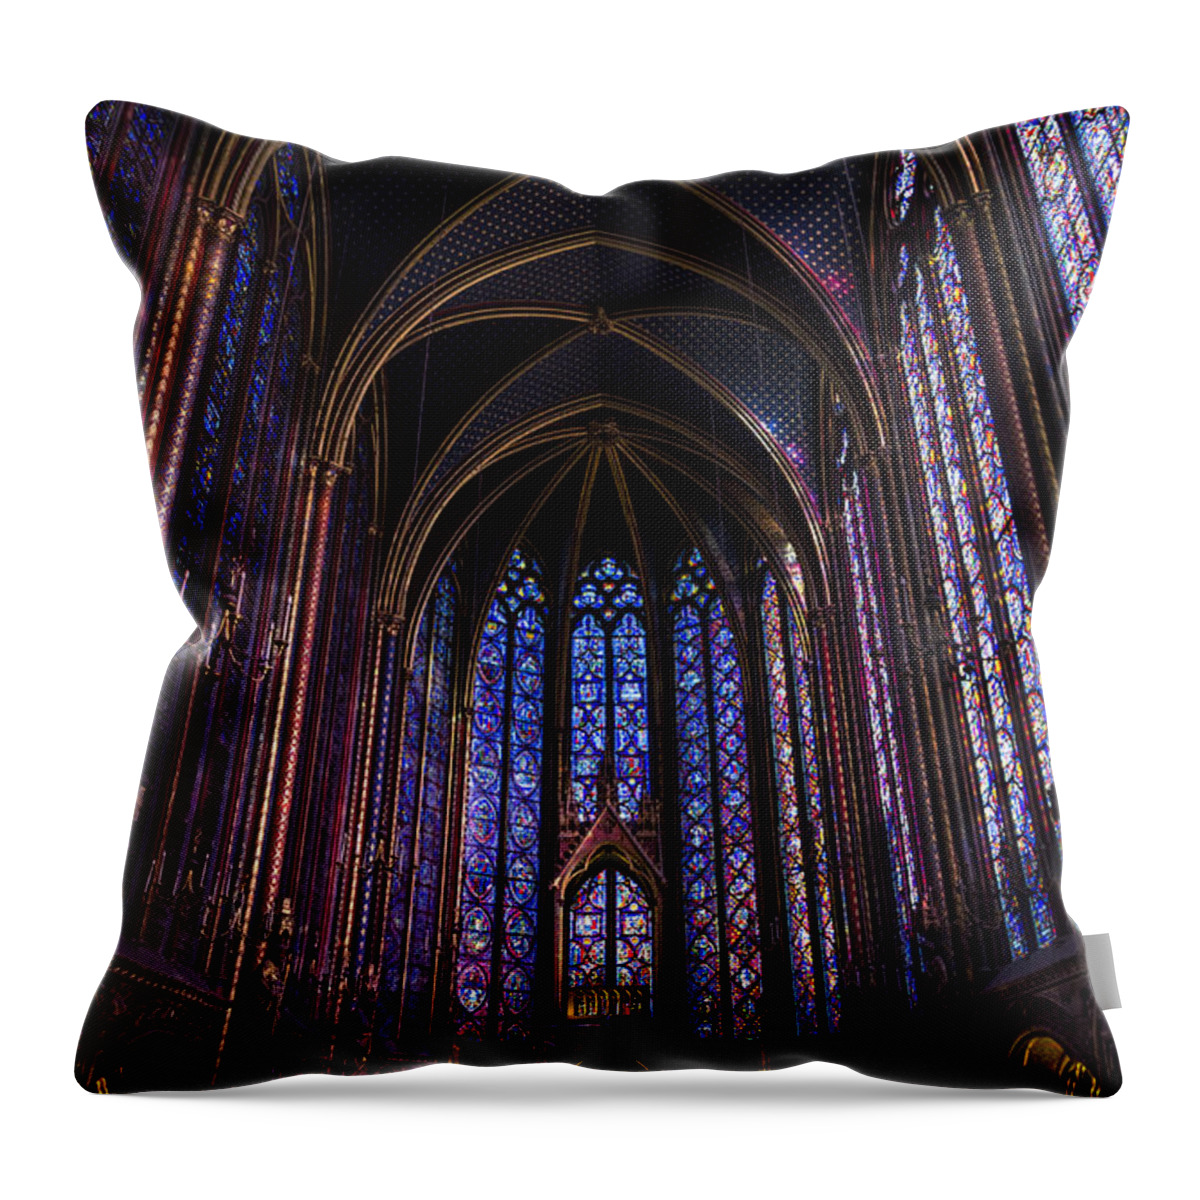 Sainte Throw Pillow featuring the photograph Sainte Chapelle by Pablo Lopez